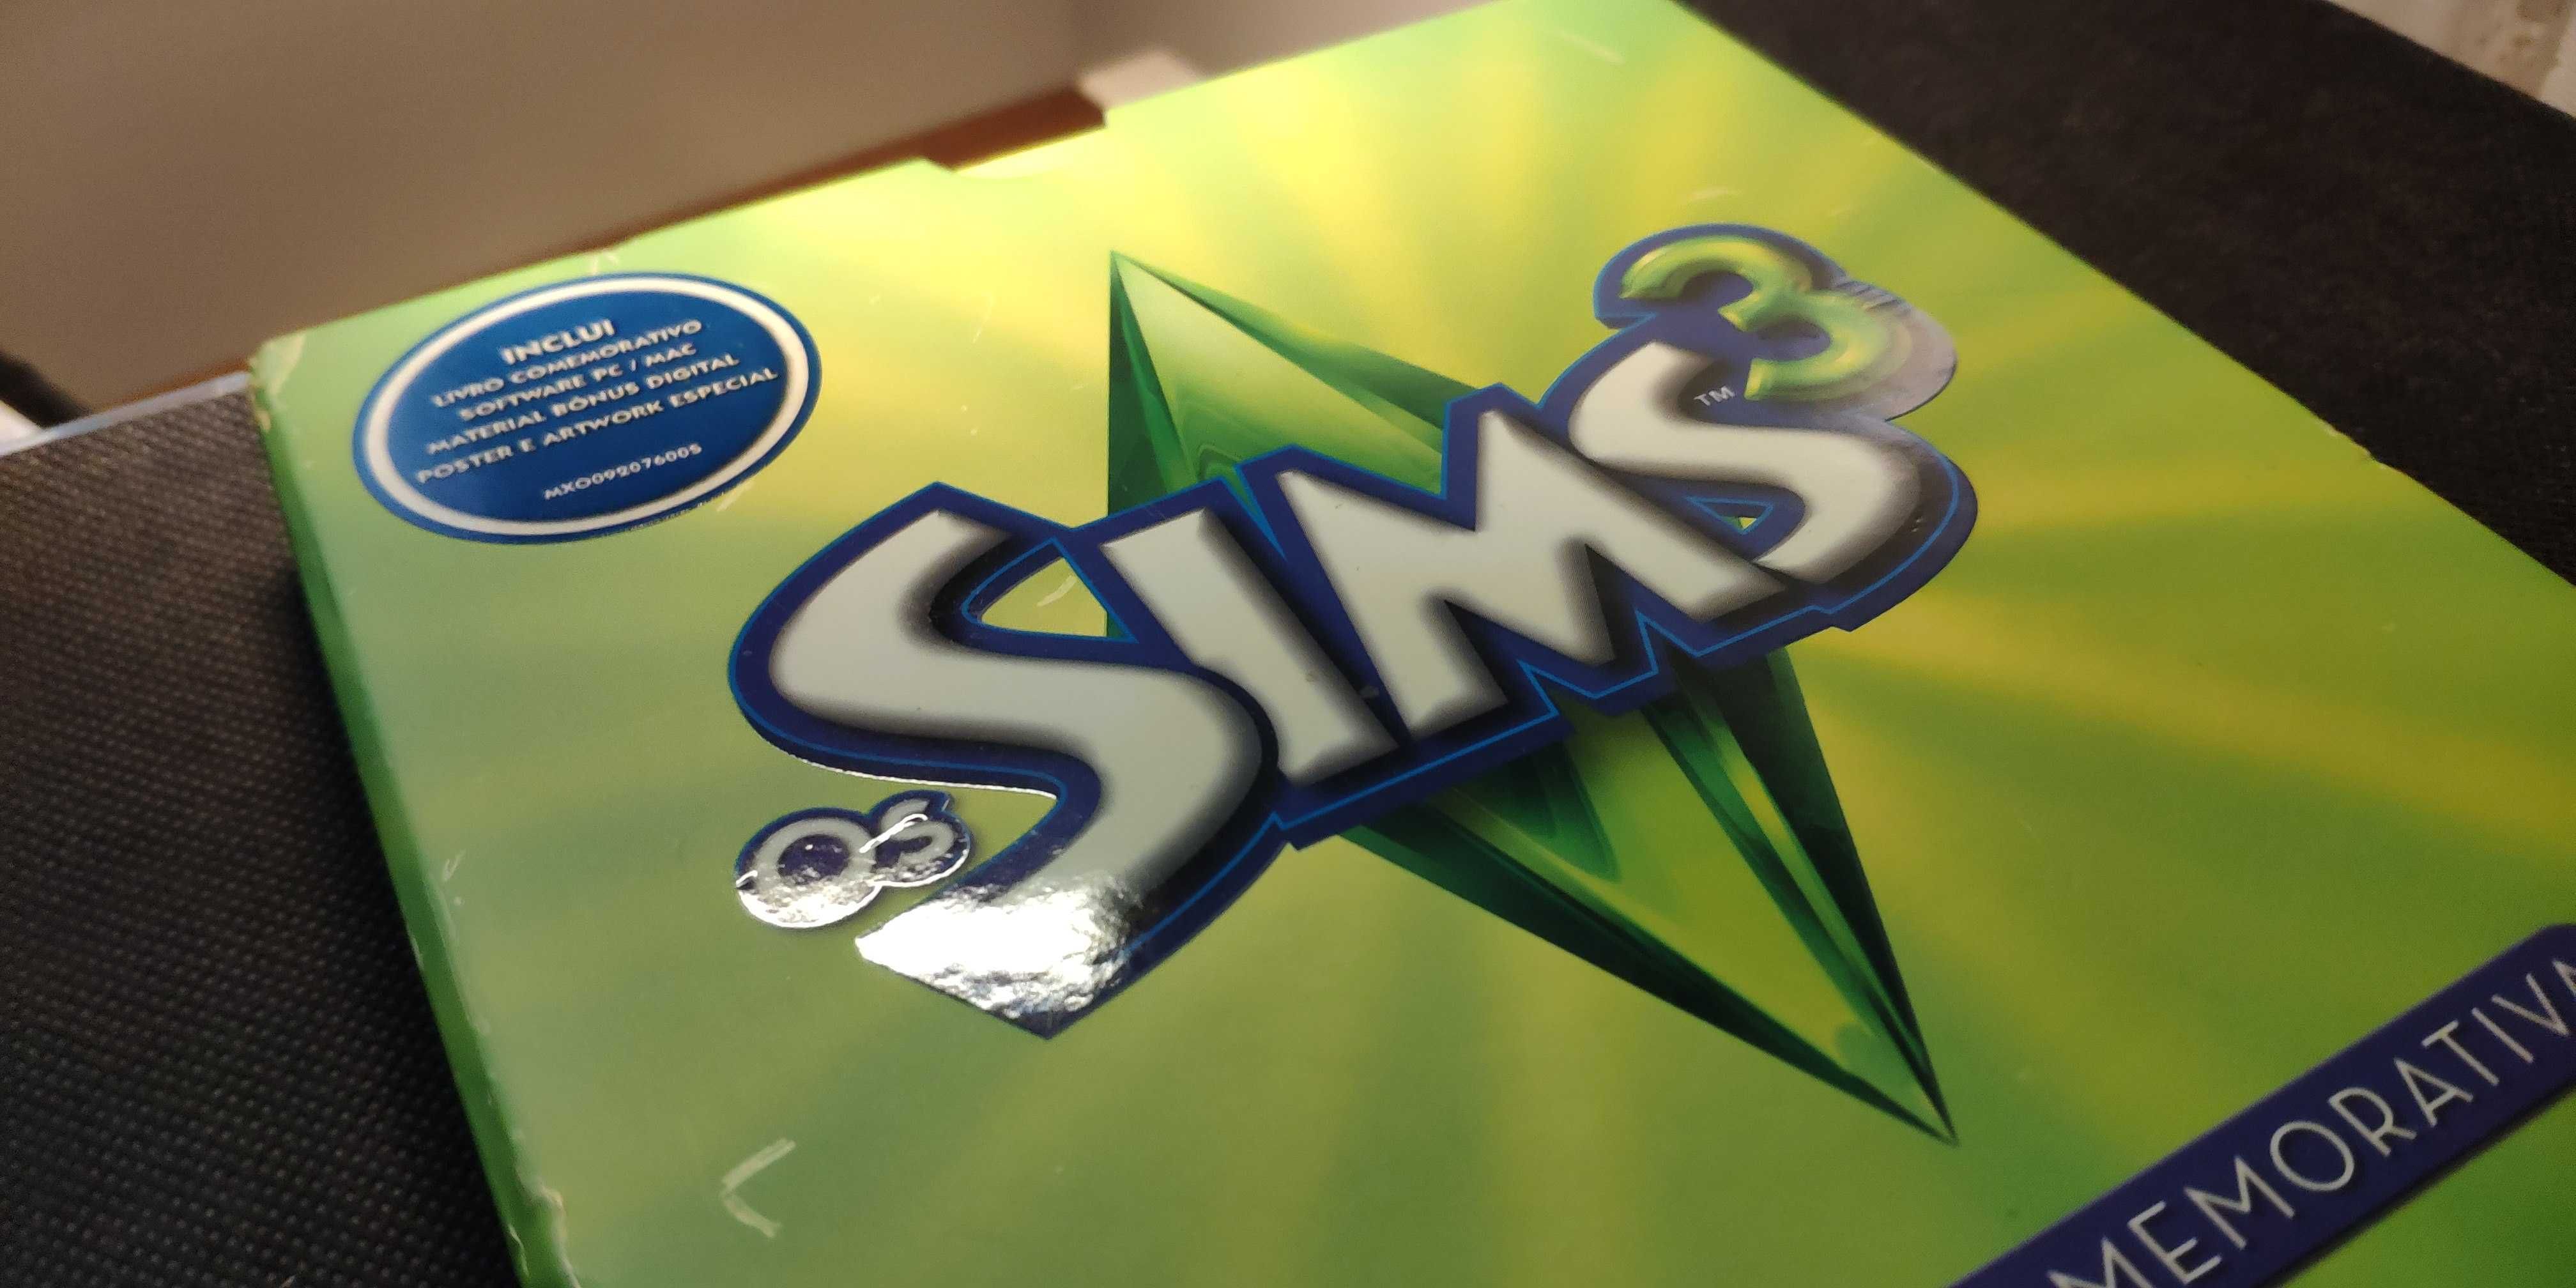 Sims 3: Commemorative Edition (PT) (Windows/Mac, 2009)